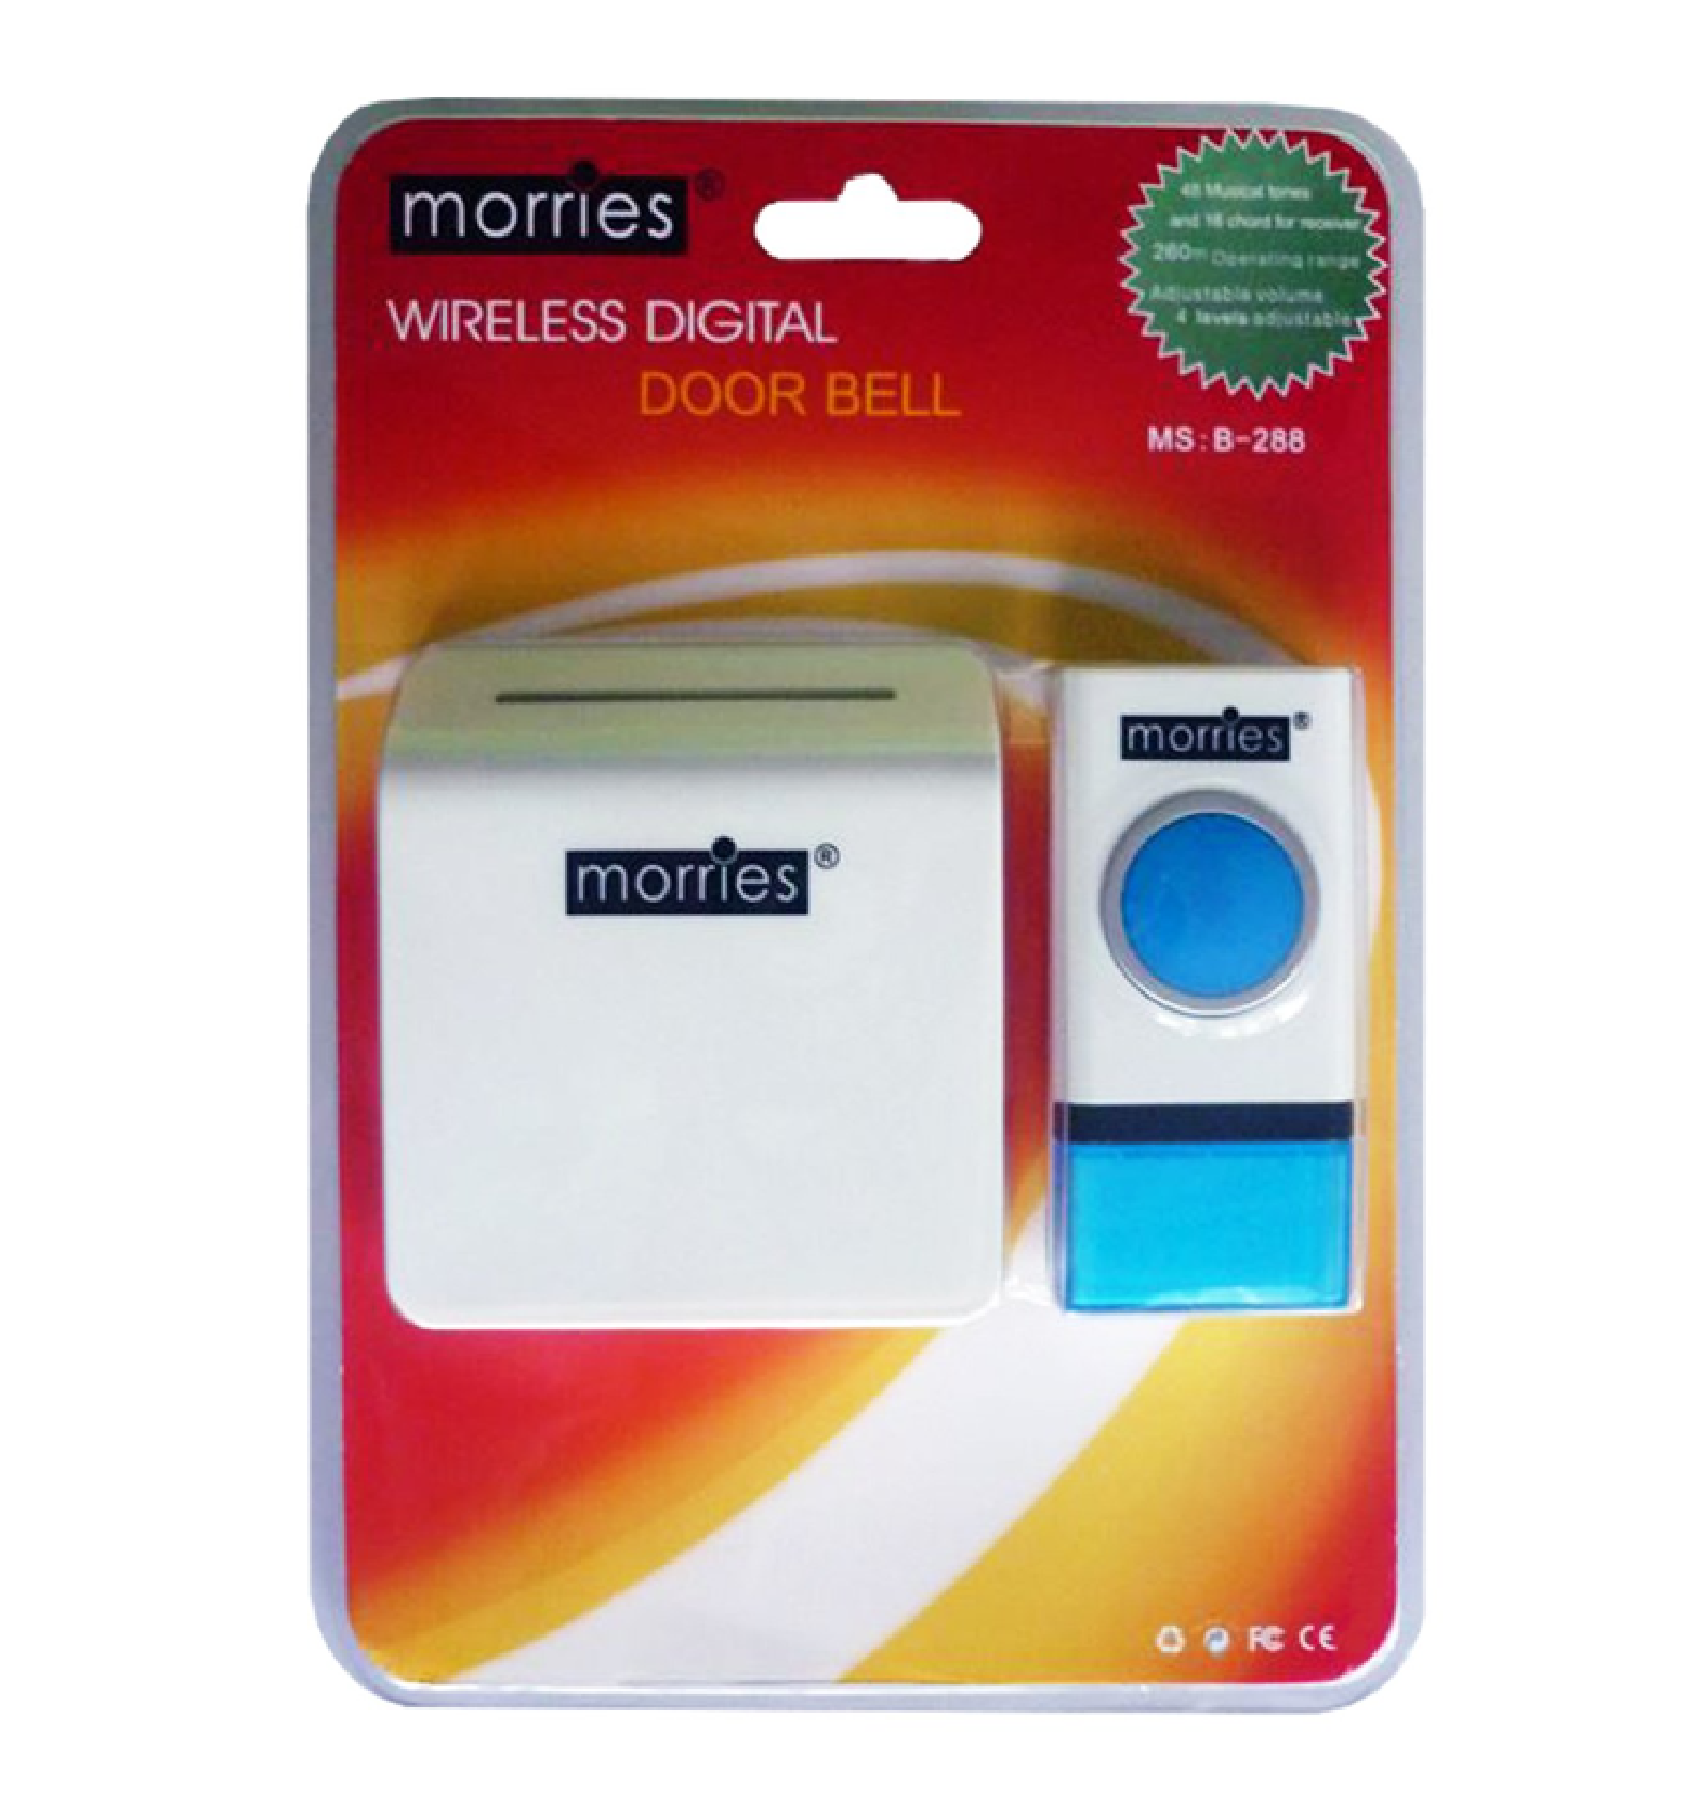 Morries MS-B-288 Wireless Doorbell (DIRECT 3 PIN PLUG)